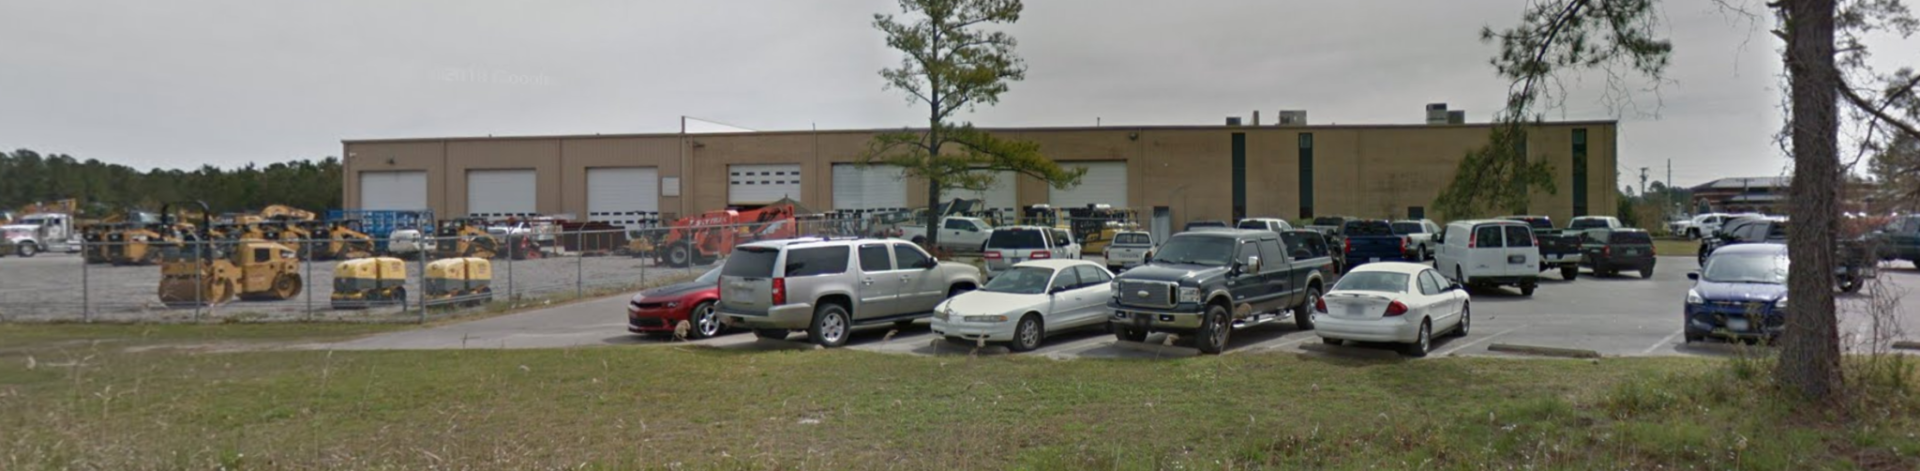 Forklift Sales Rental Service Wilmington Nc Gregory Poole Lift